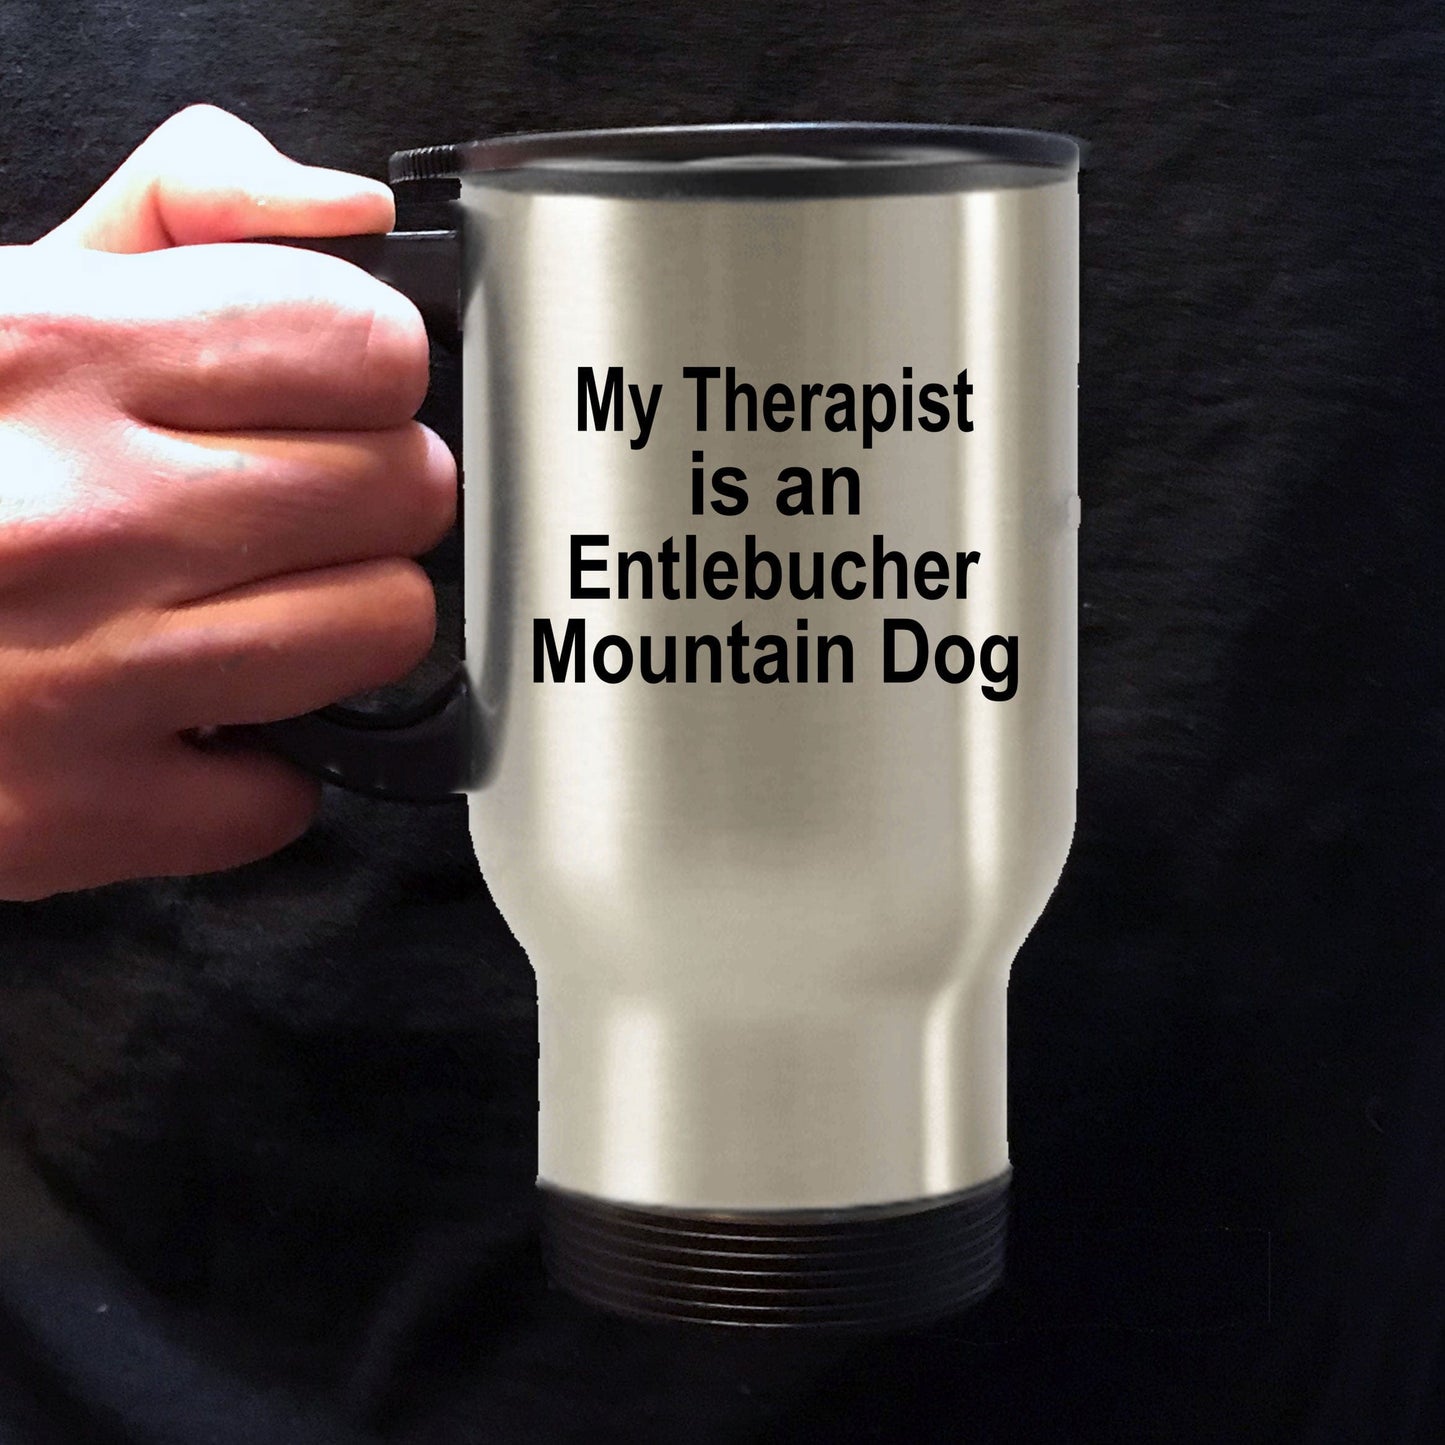 Entlebucher Mountain Dog Therapist Travel Coffee Mug